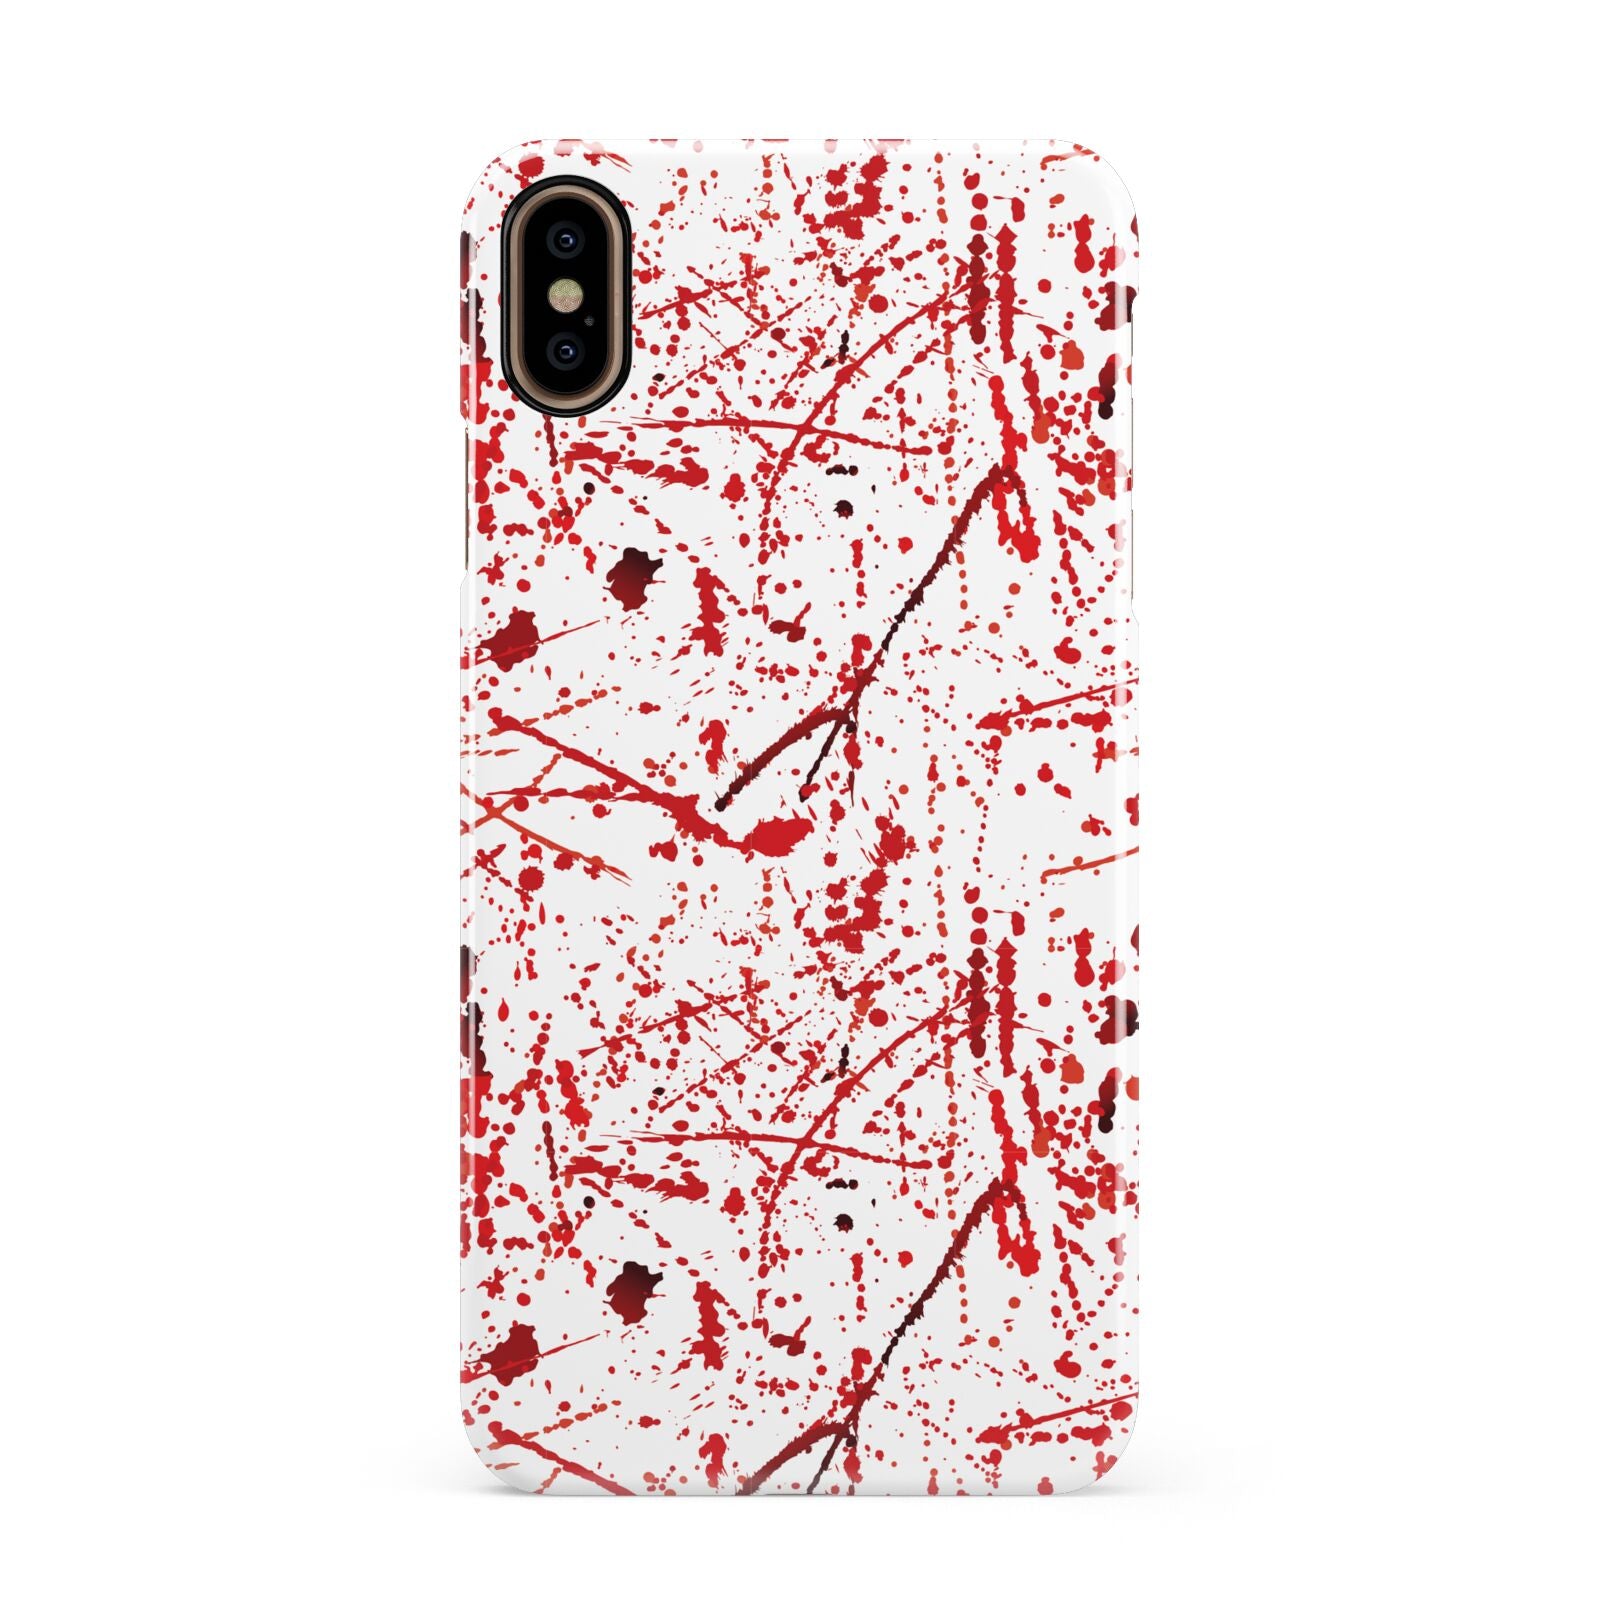 Blood Splatter Apple iPhone Xs Max 3D Snap Case